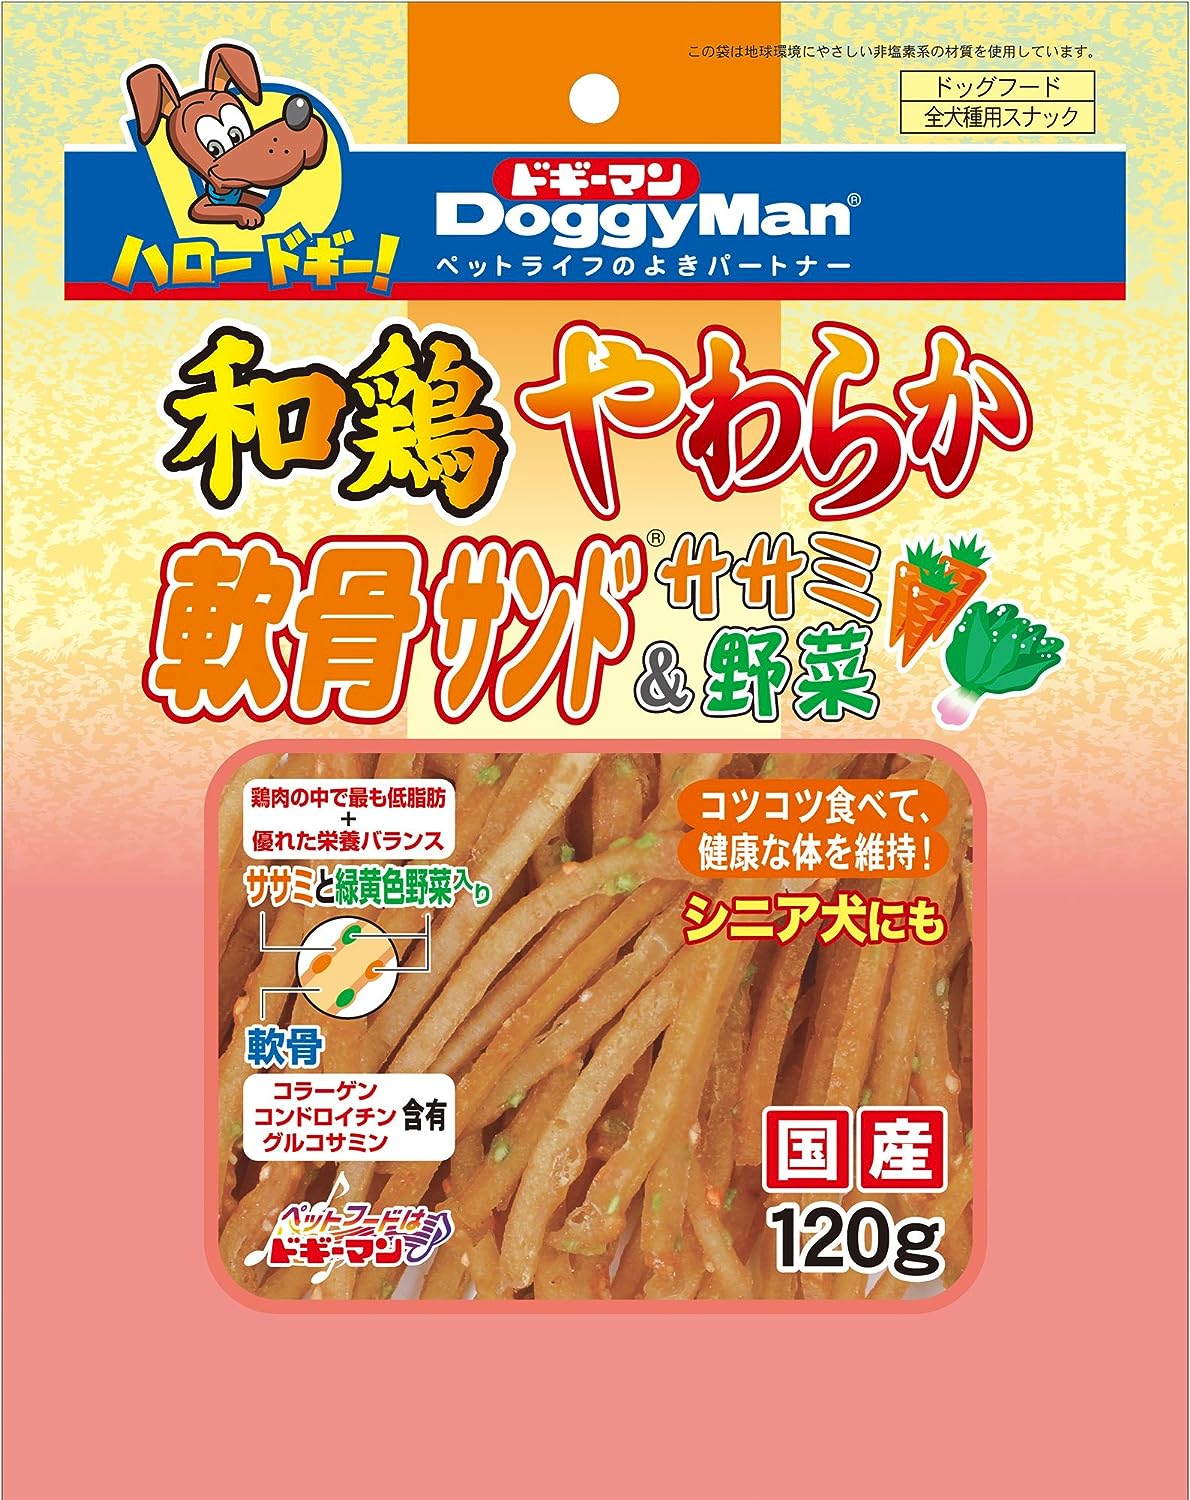 DoggyMan Japanese Chicken Soft Cartilage Sandwich, Fillet & Vegetables 120g 4976555800784